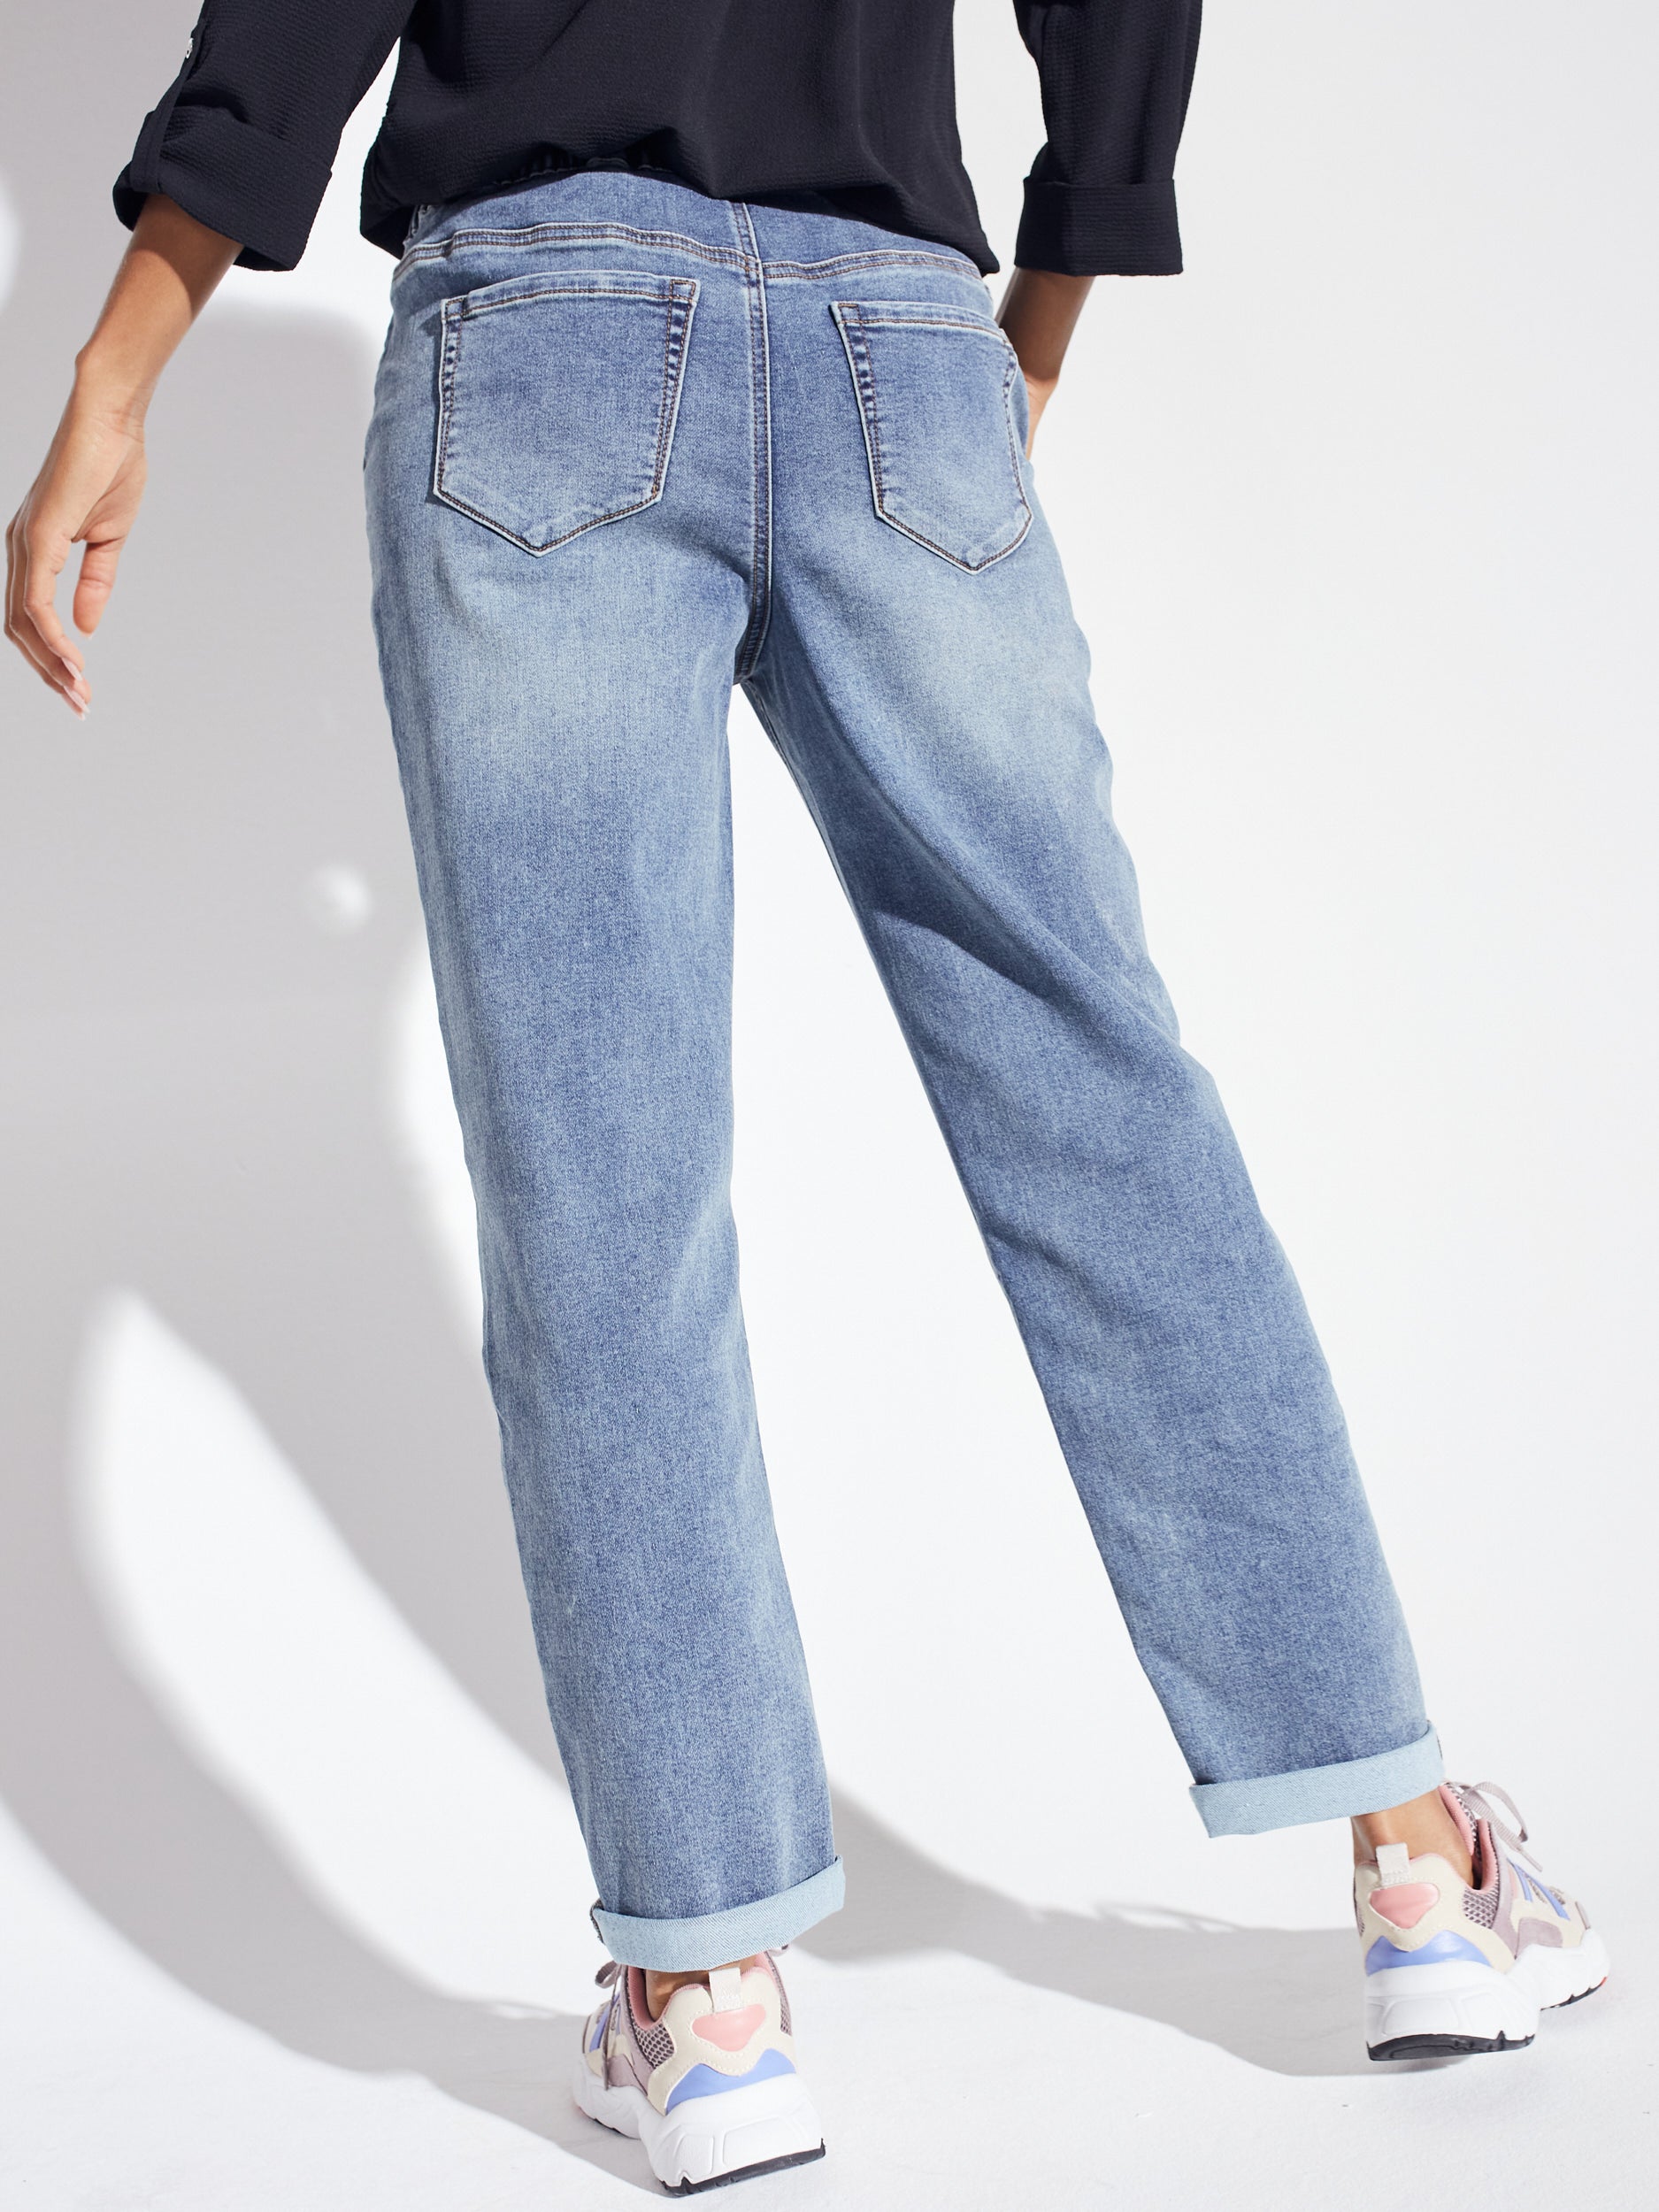 Joga Jeans Hybrid Denim Weave Sweatpants by Silver Jeans